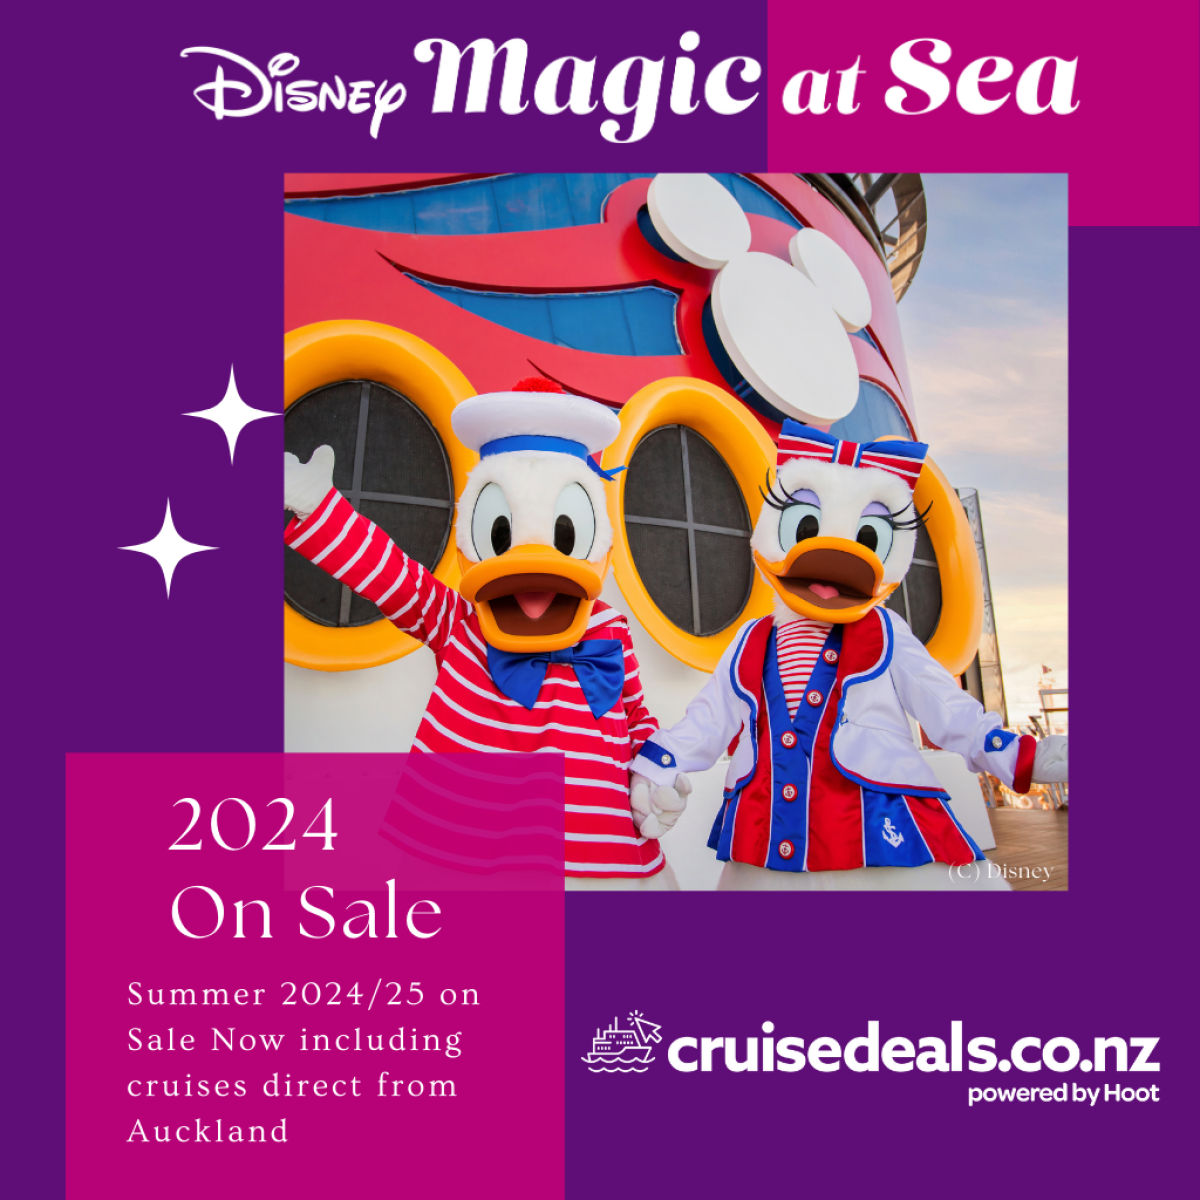 Disney Magic at Sea 2024